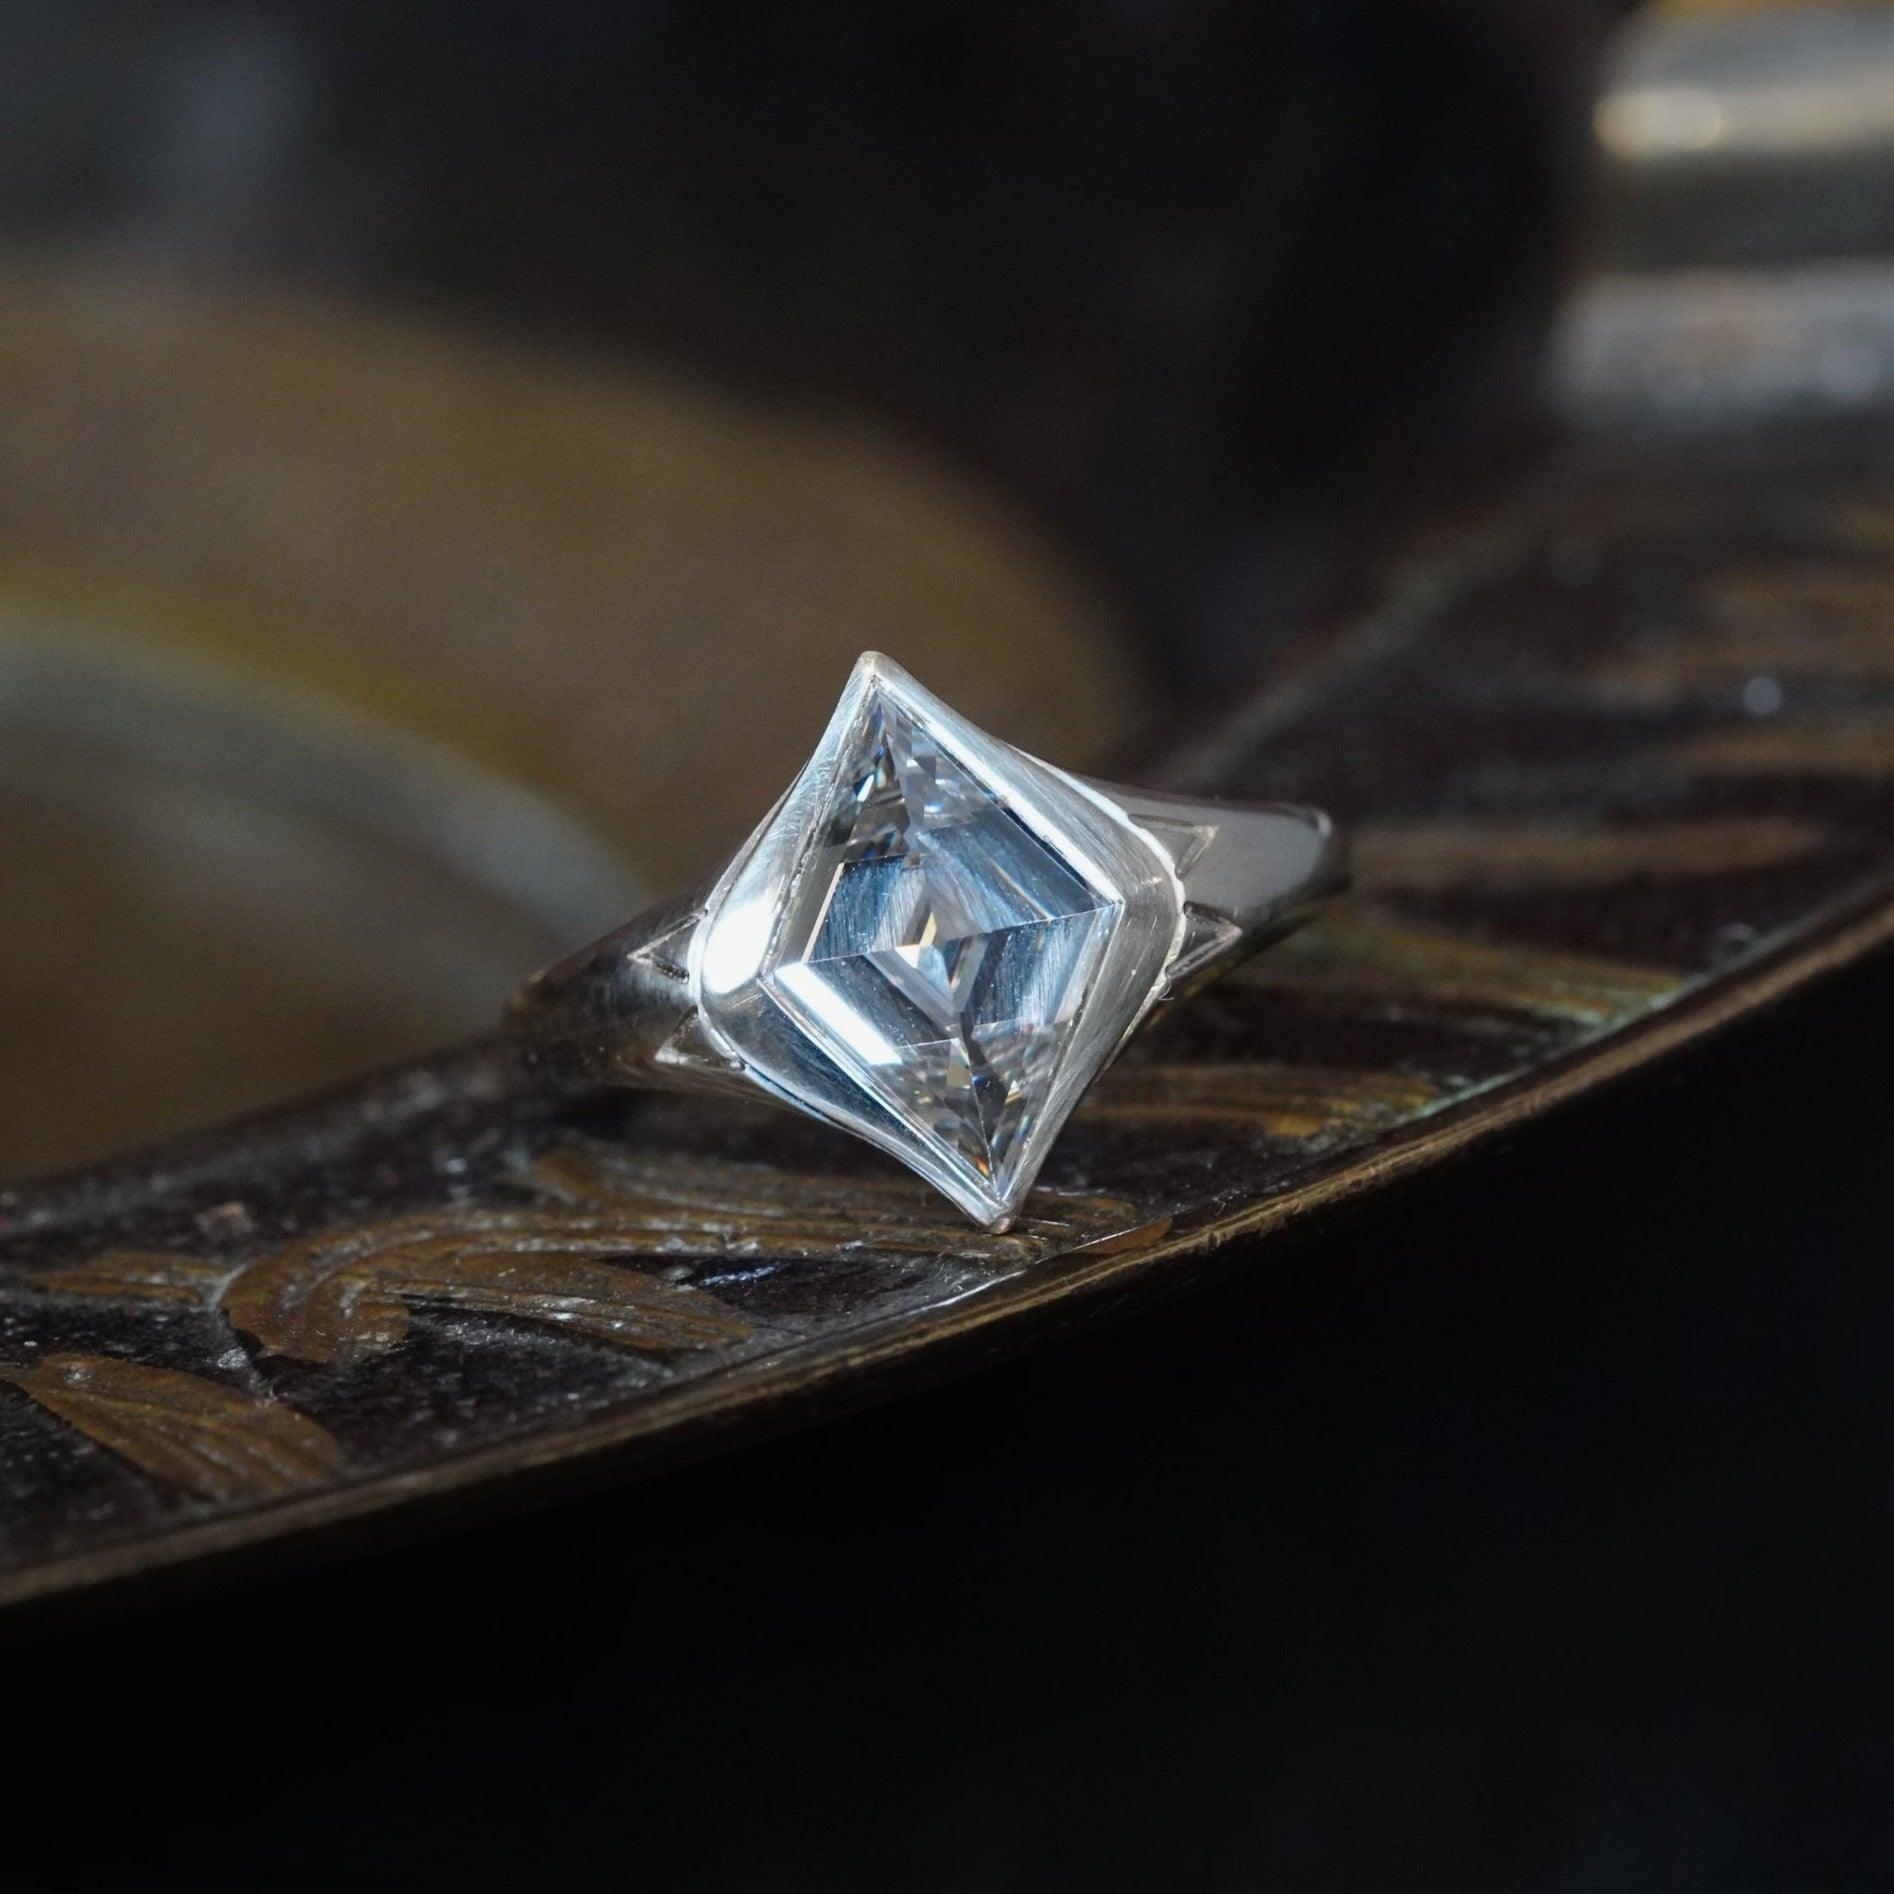 Stunning 2.12 CT Lozenge Step Cut Diamond: A Renaissance Revival in 18K White Gold from Jogani